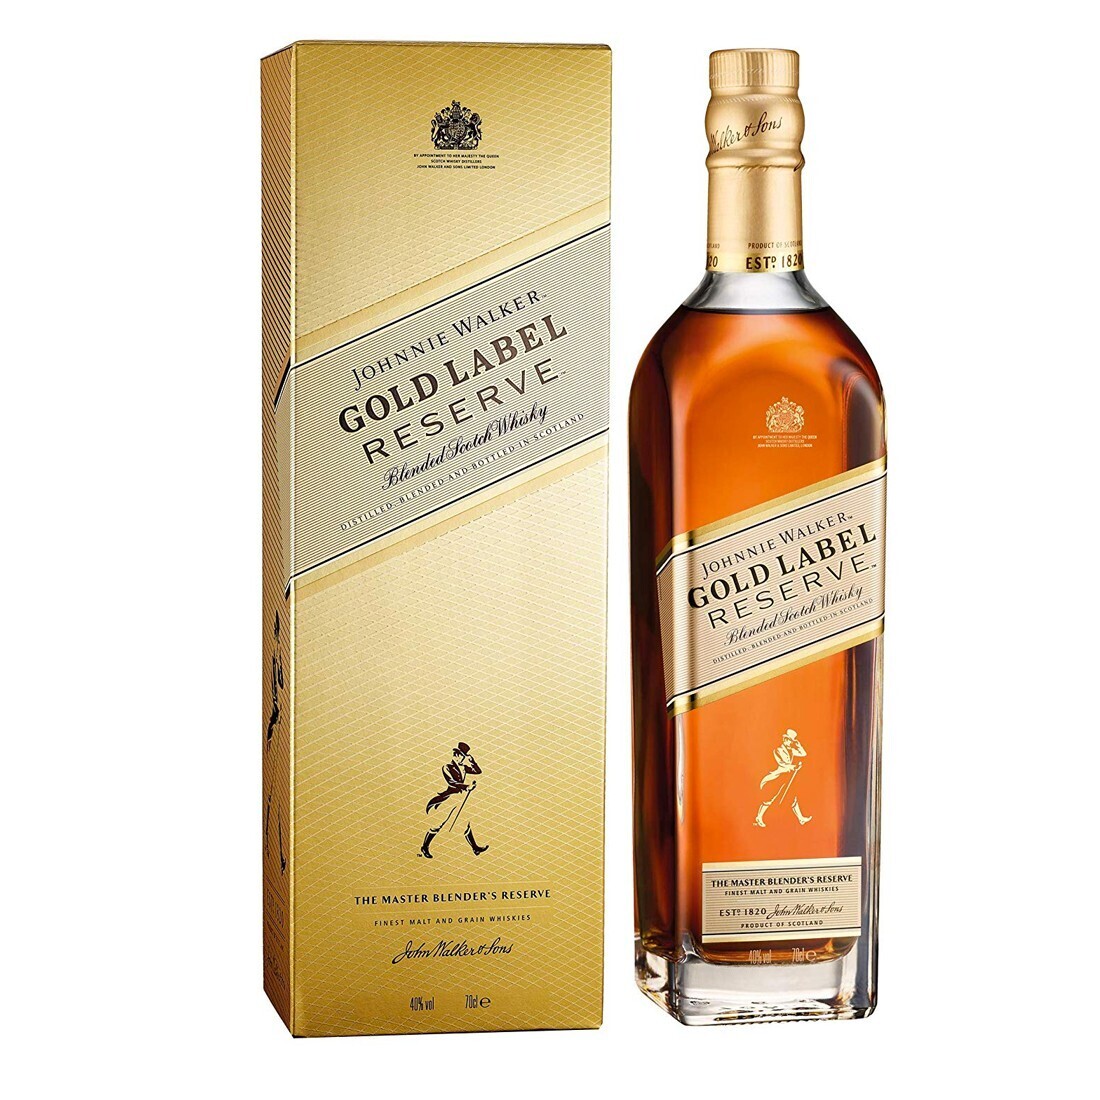 Whisky Johnnie Walker Gold Label Litro 40°